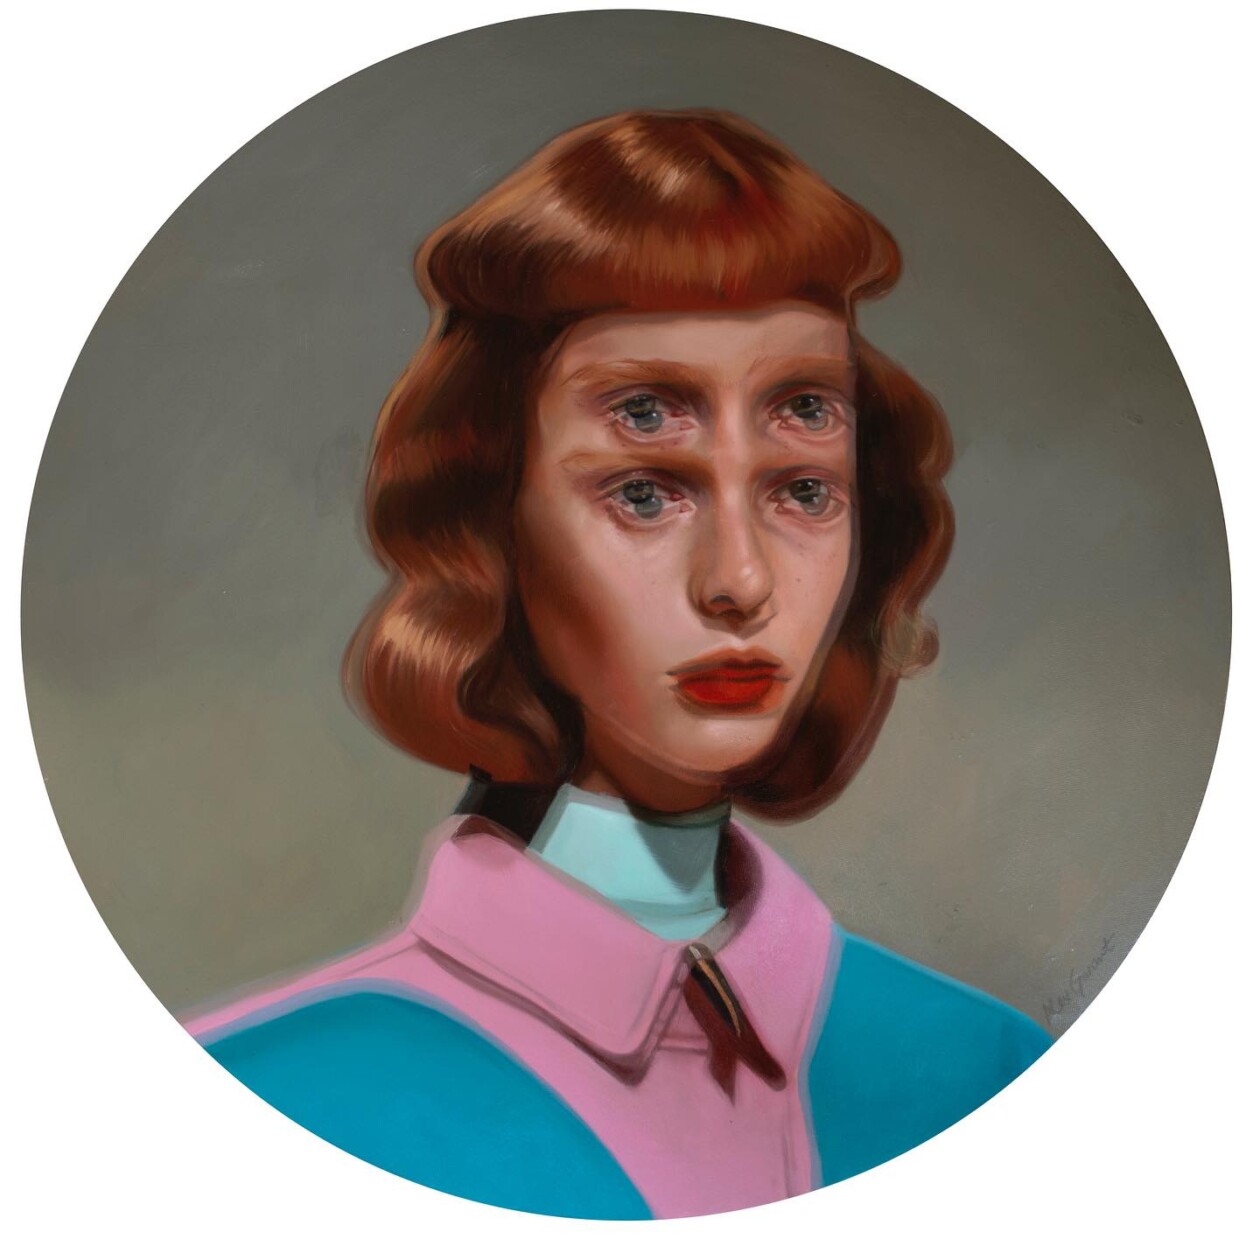 Alex Garant Overlaps Repeated Female Figures To Create Unique And Hypnotizing Portrait Paintings (3)